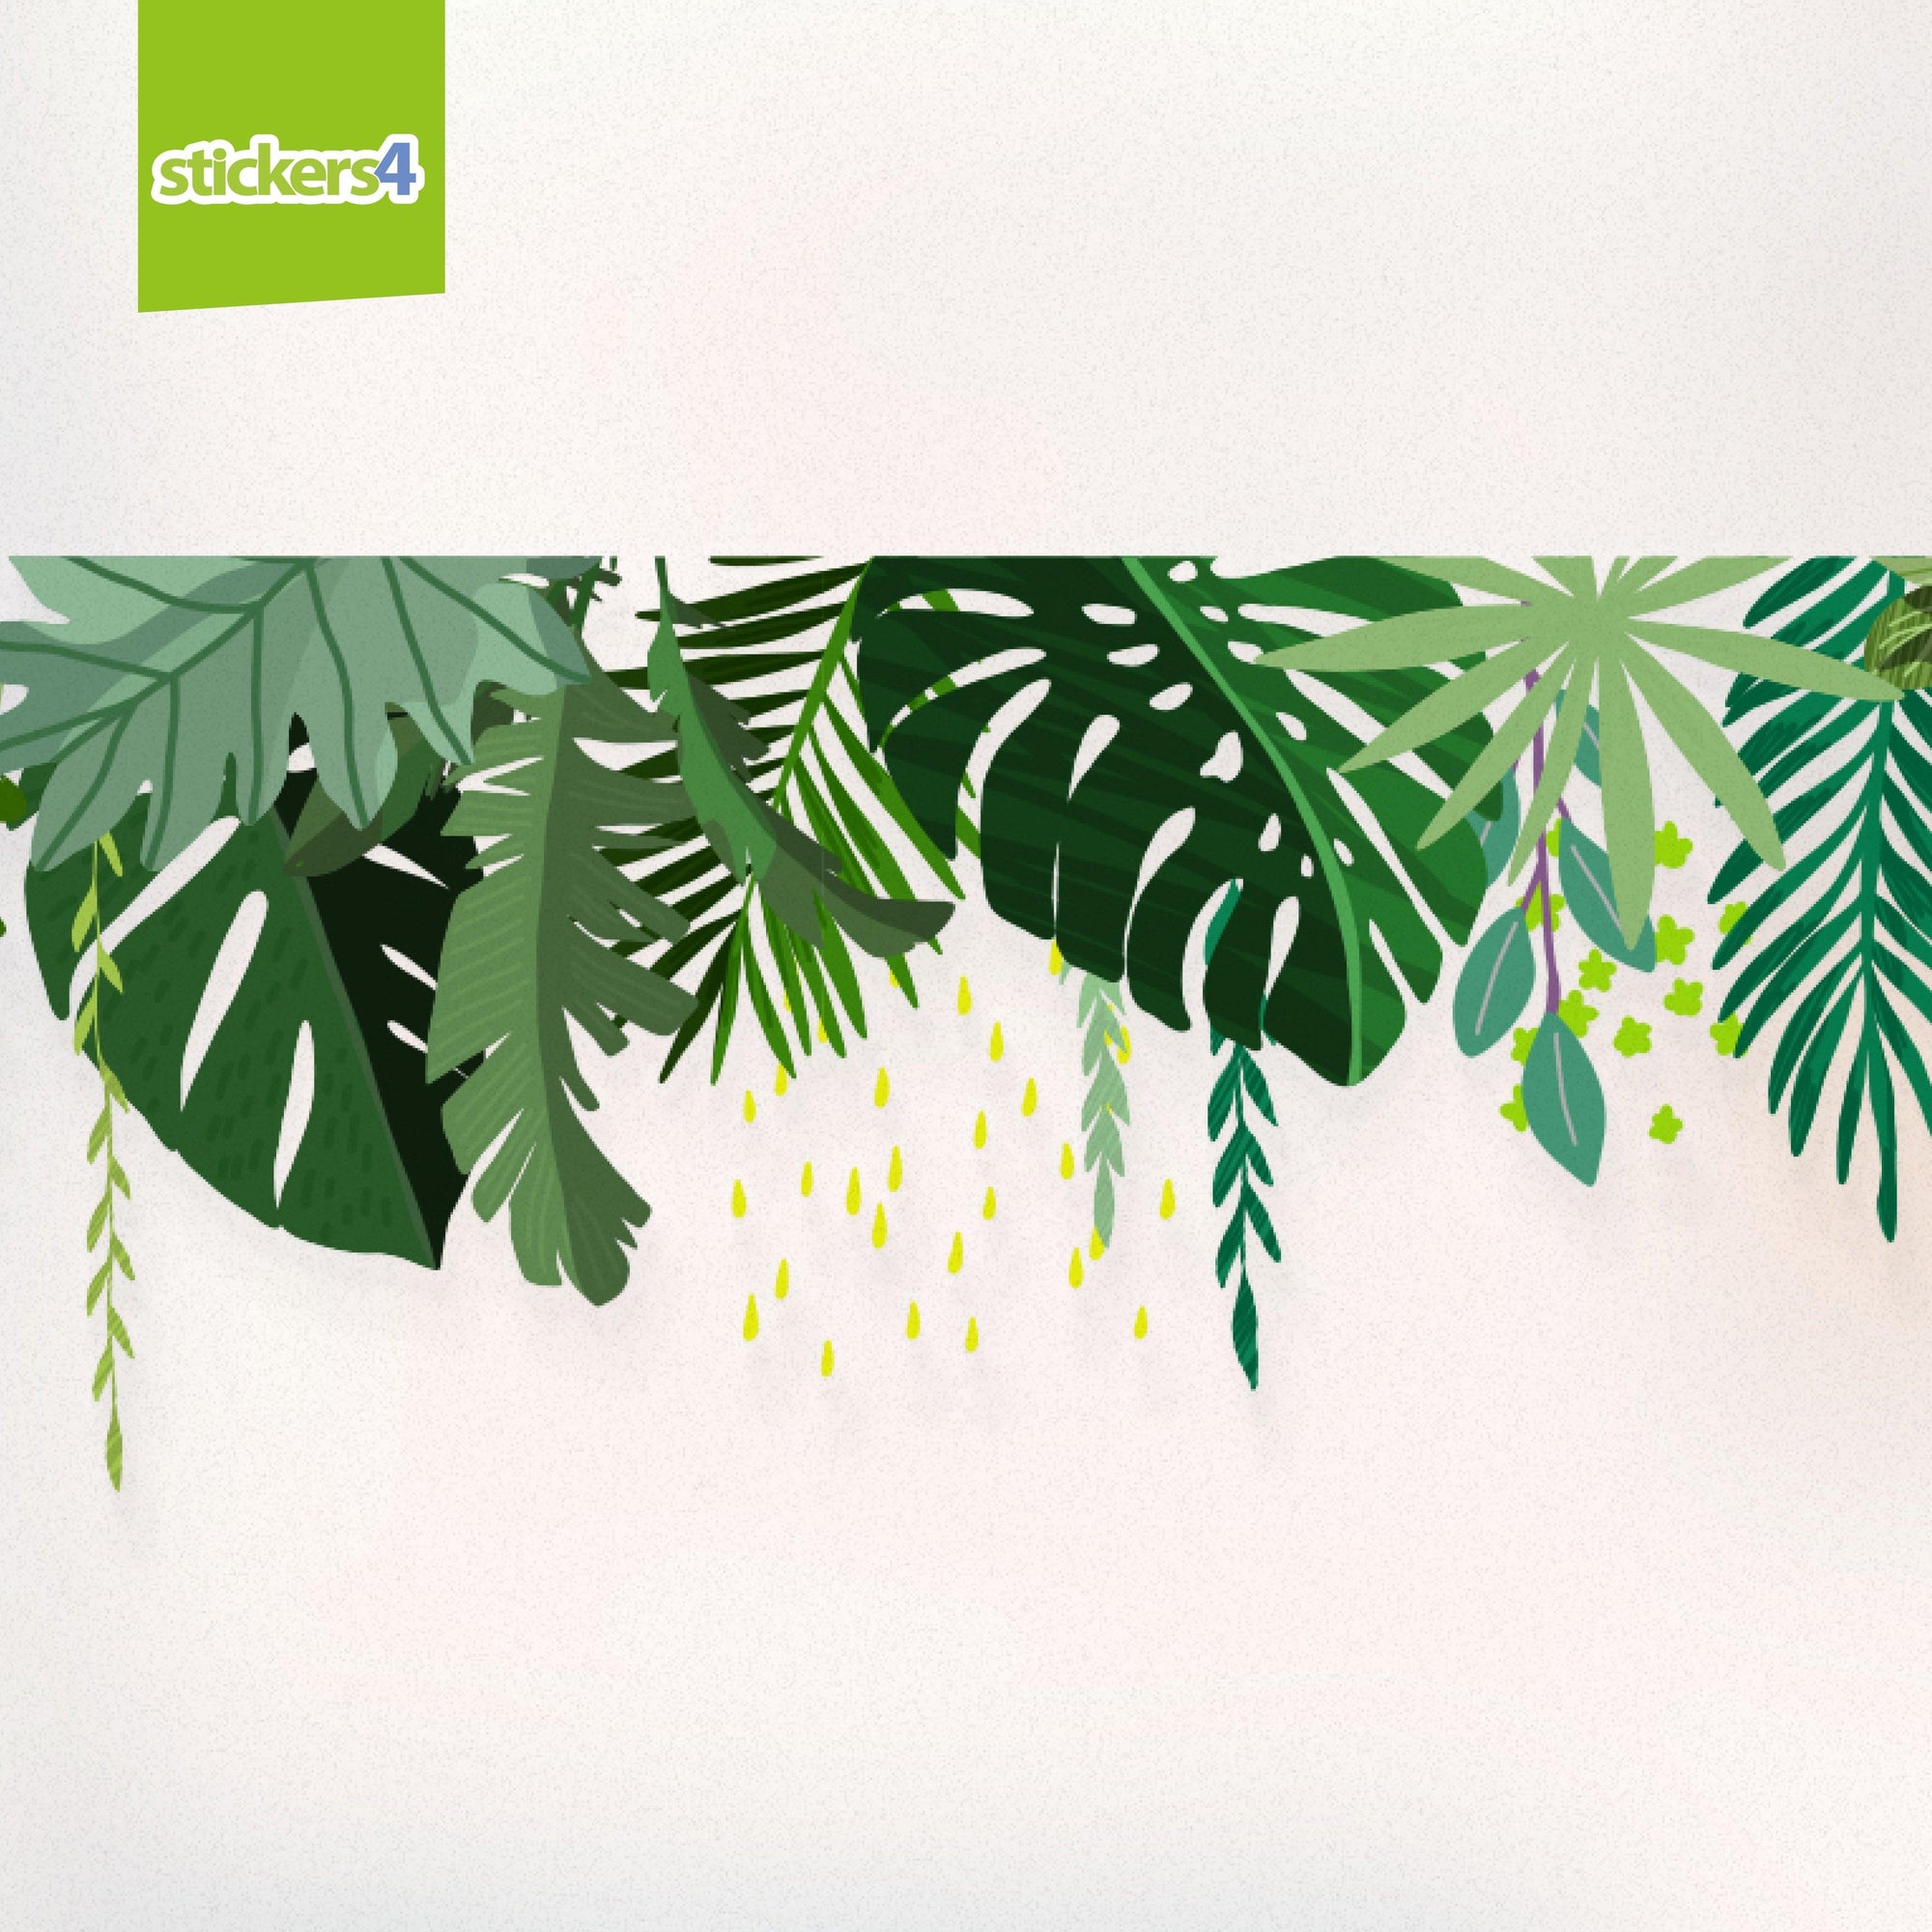 Jungle Leaves Border - Summer Foliage Window Cling Sticker Seasonal Window Display